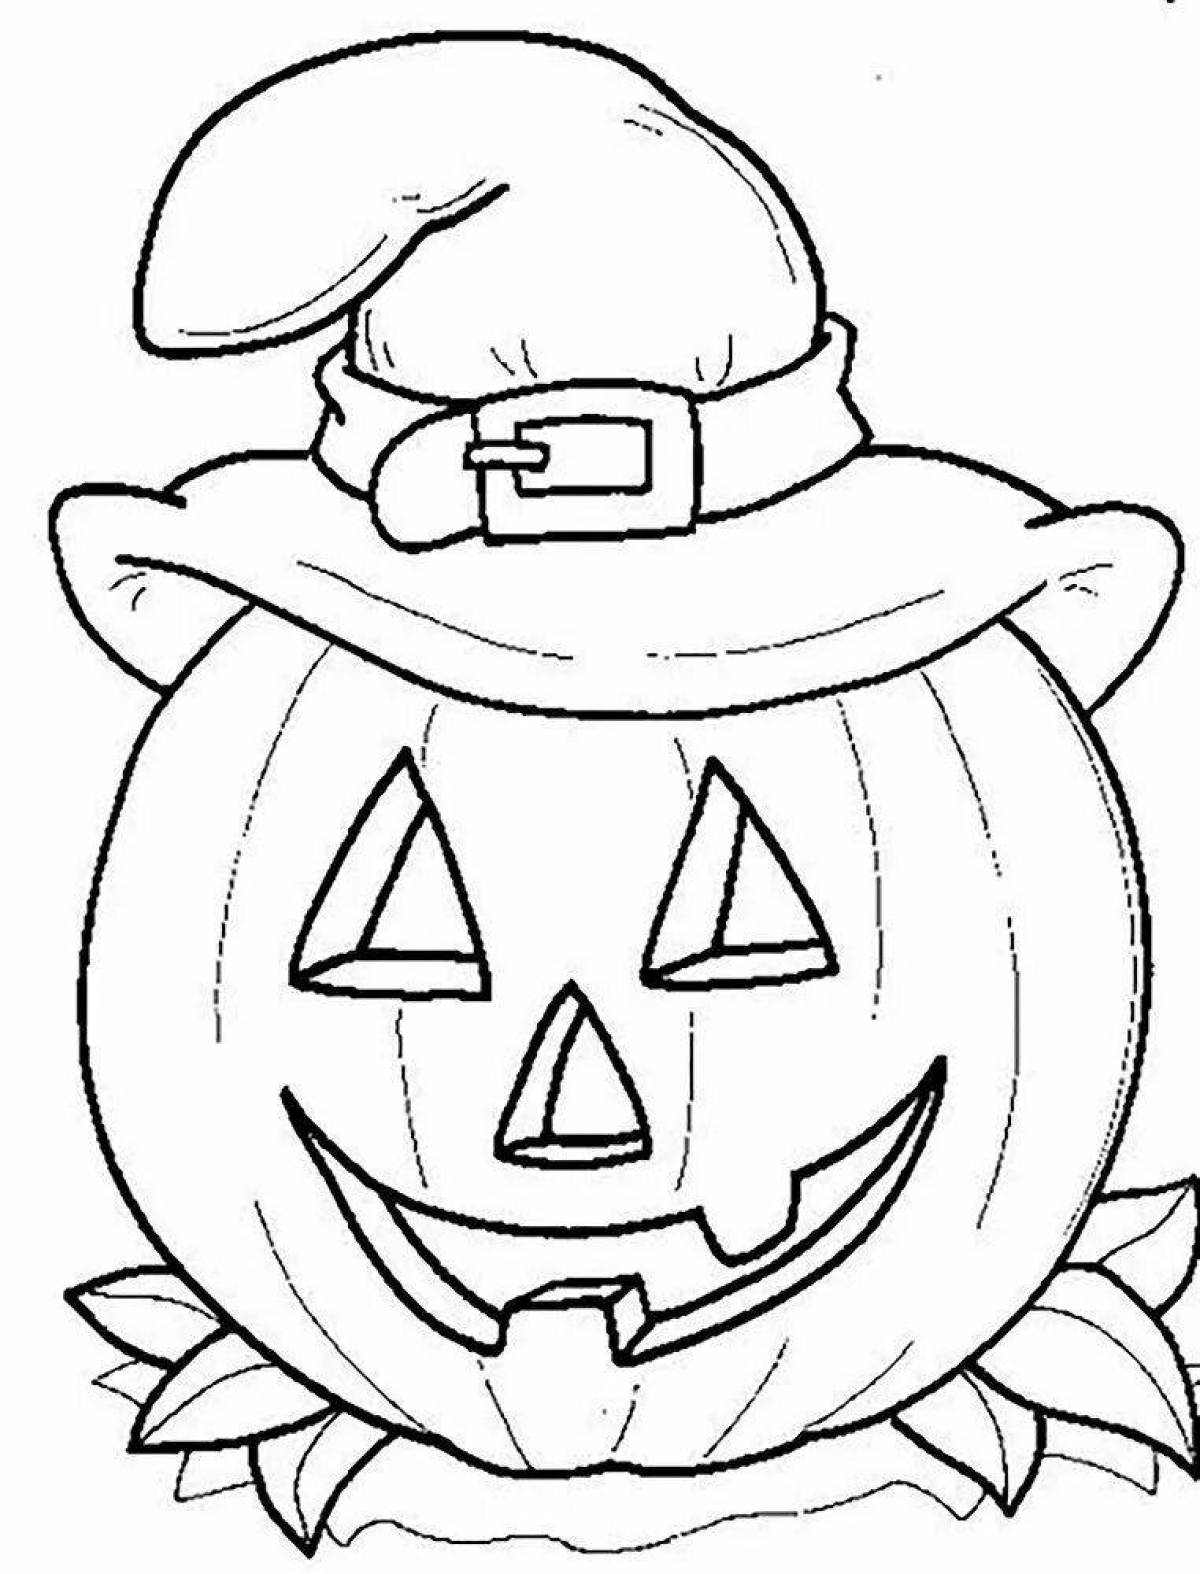 Shocking halloween pumpkin coloring page